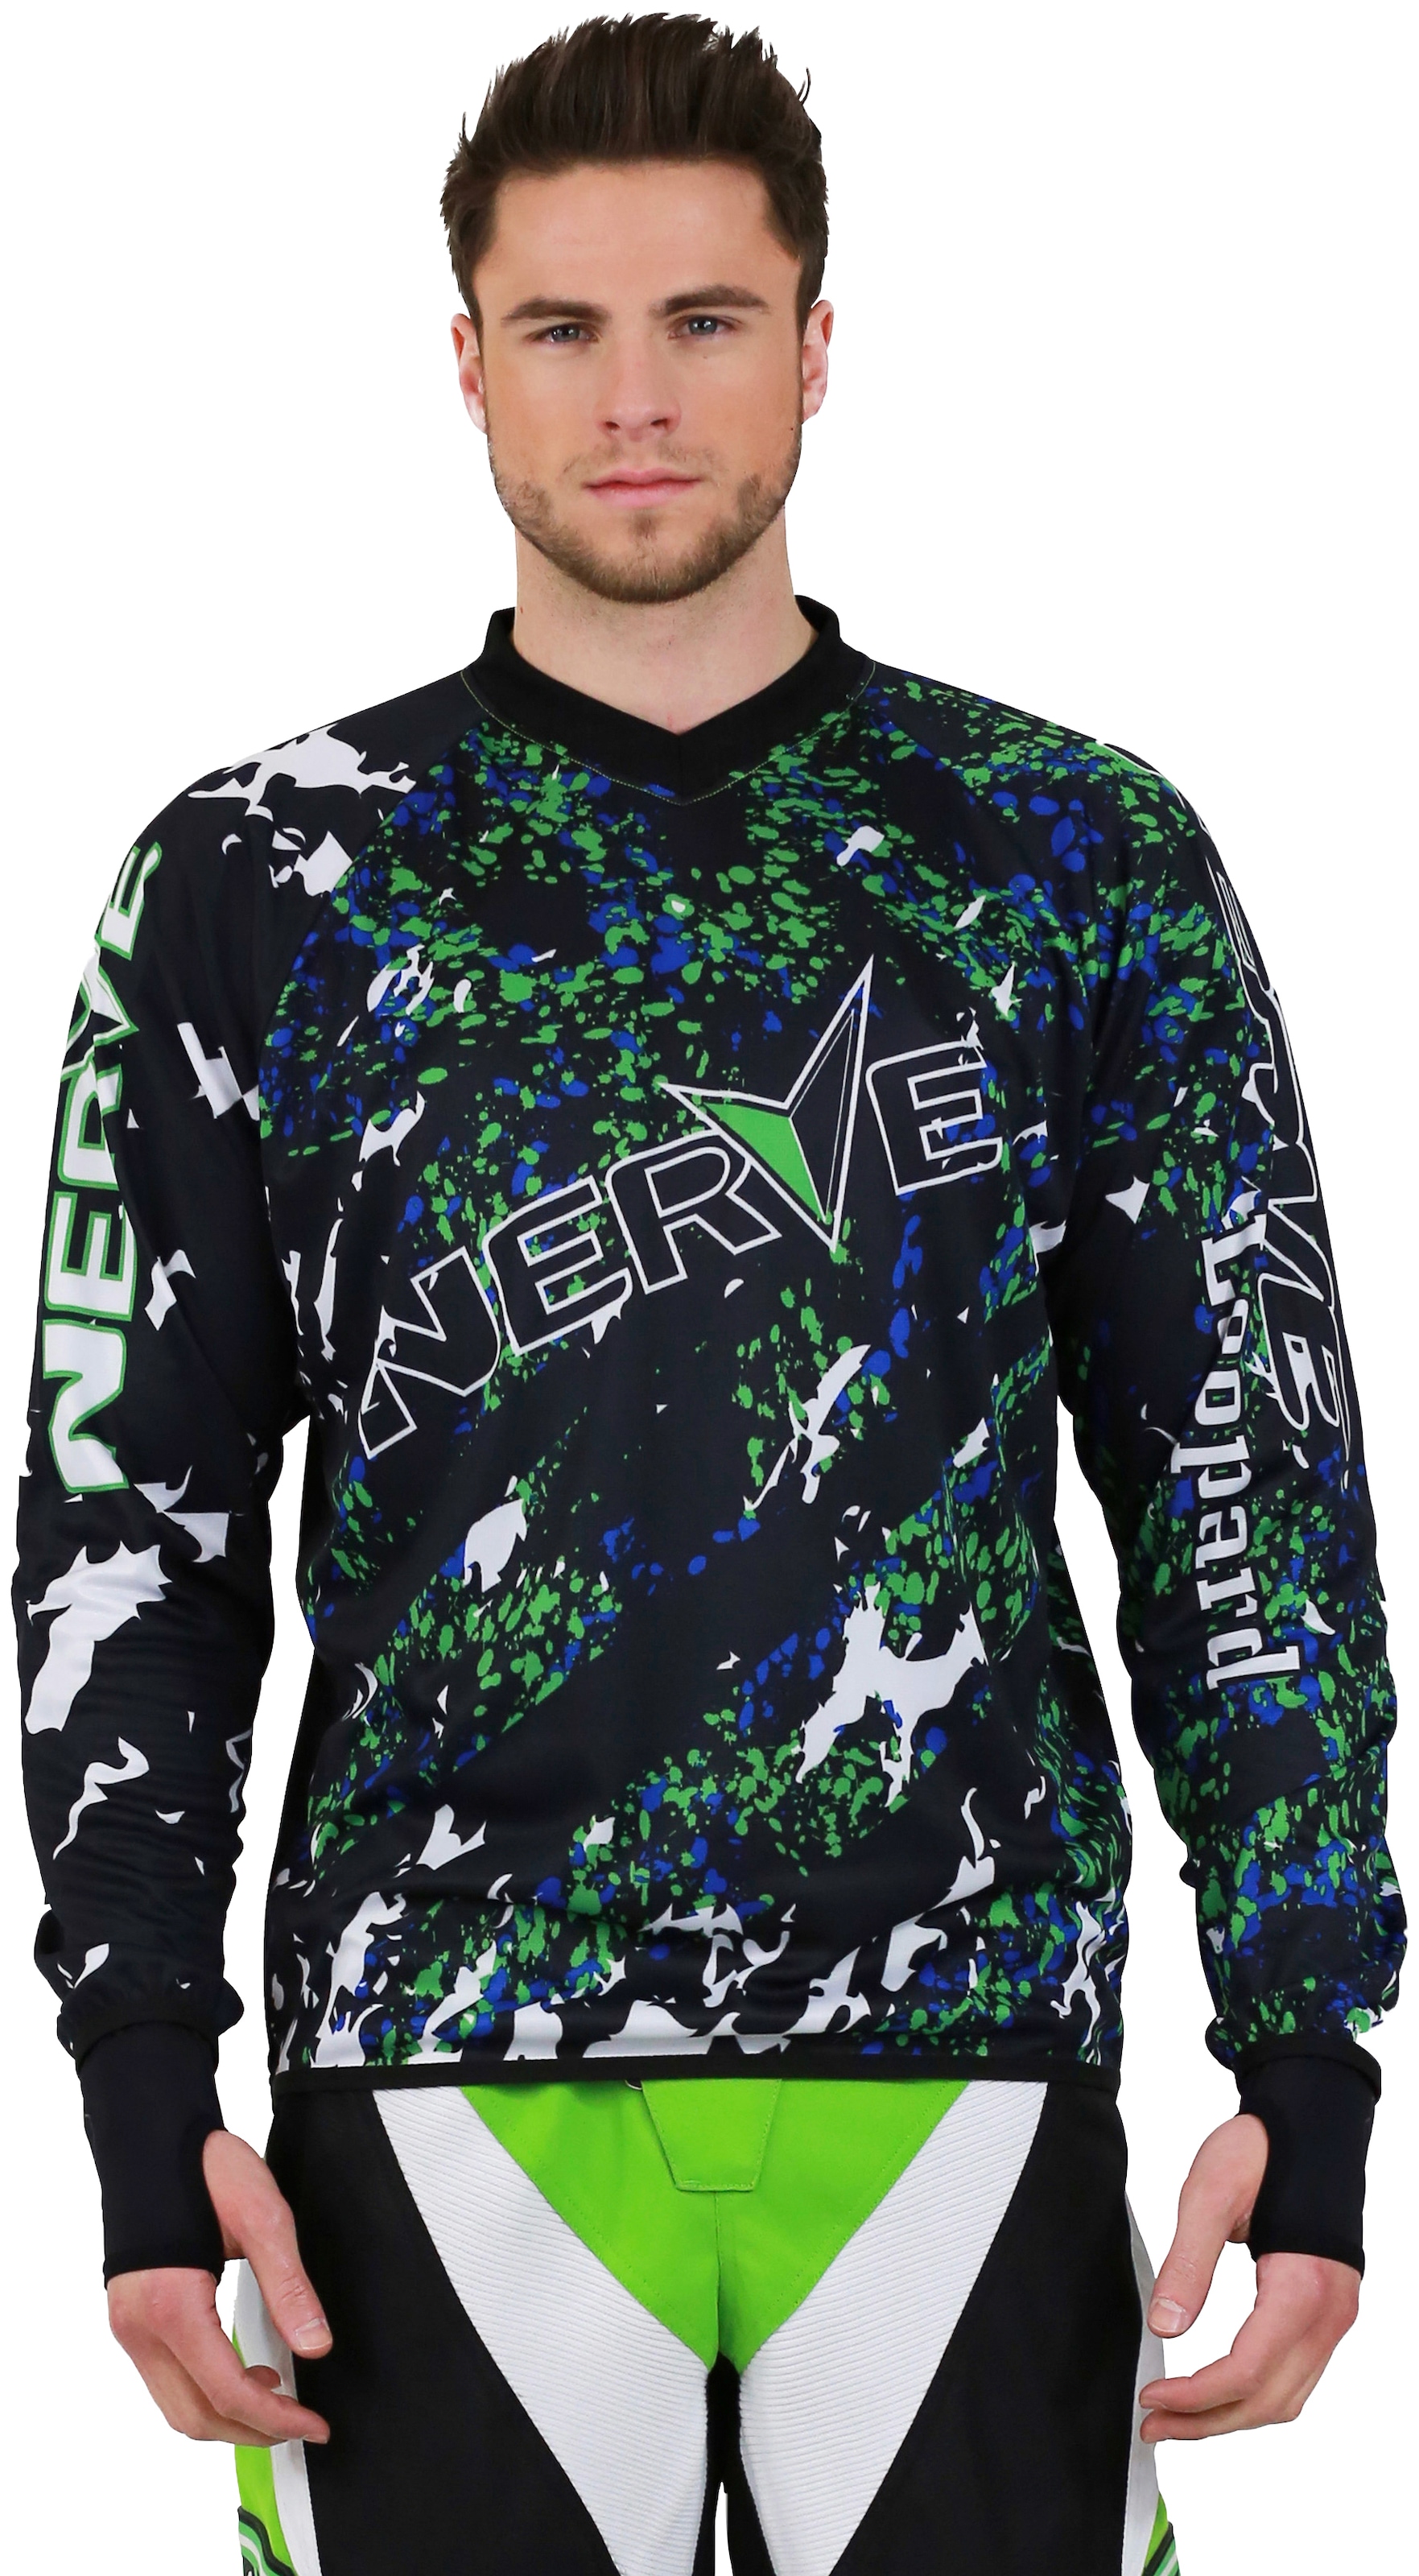 NERVE Motocross-Shirt »Nerve« ▷ für | BAUR